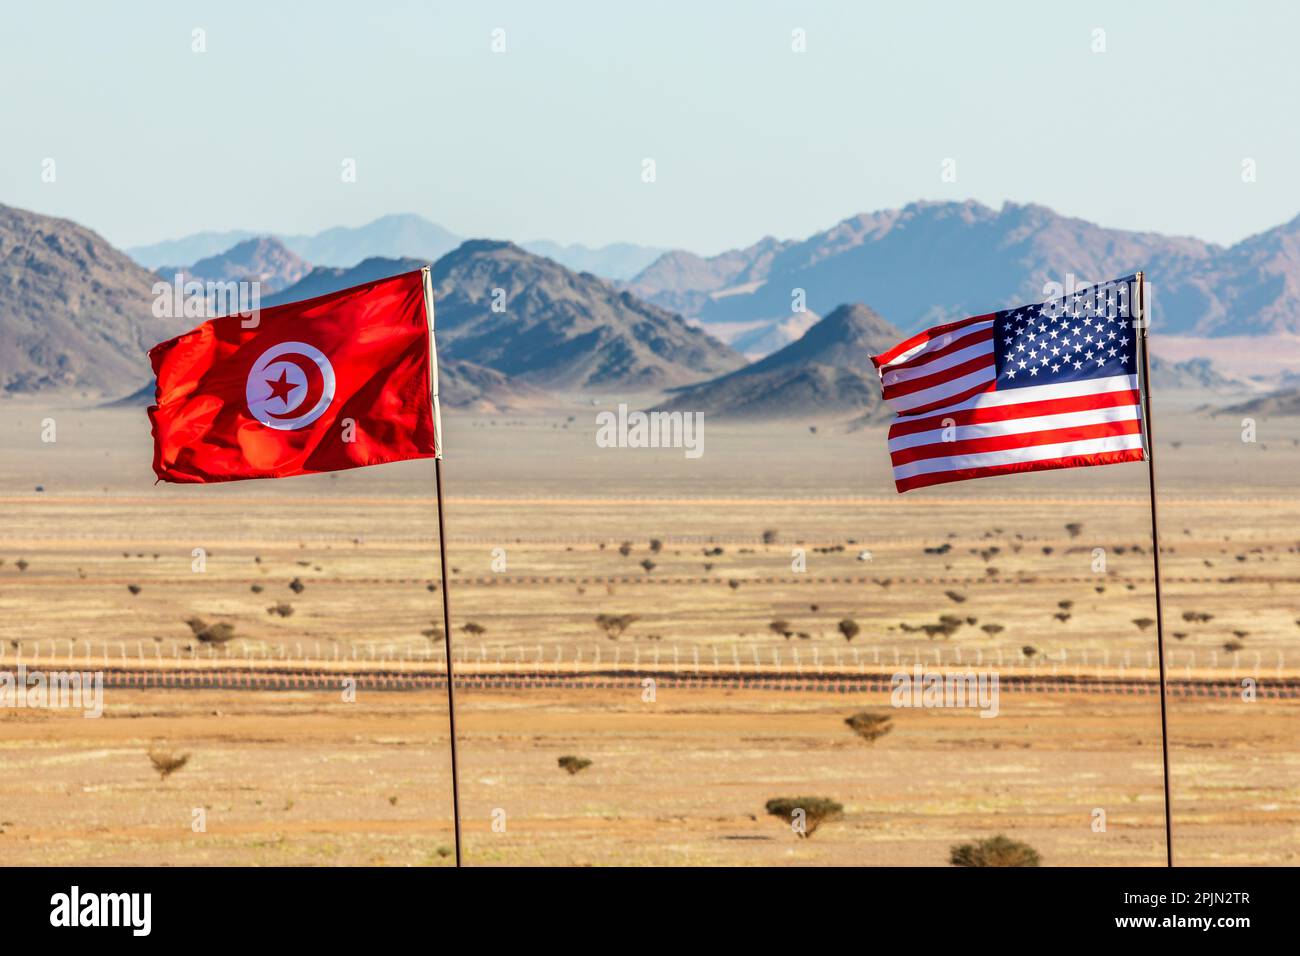 US and Tunisian flags waving togetner on the wind in Saudi Arabian desertwith mountains in background, Al Ula, Saudi Arabia Stock Photo